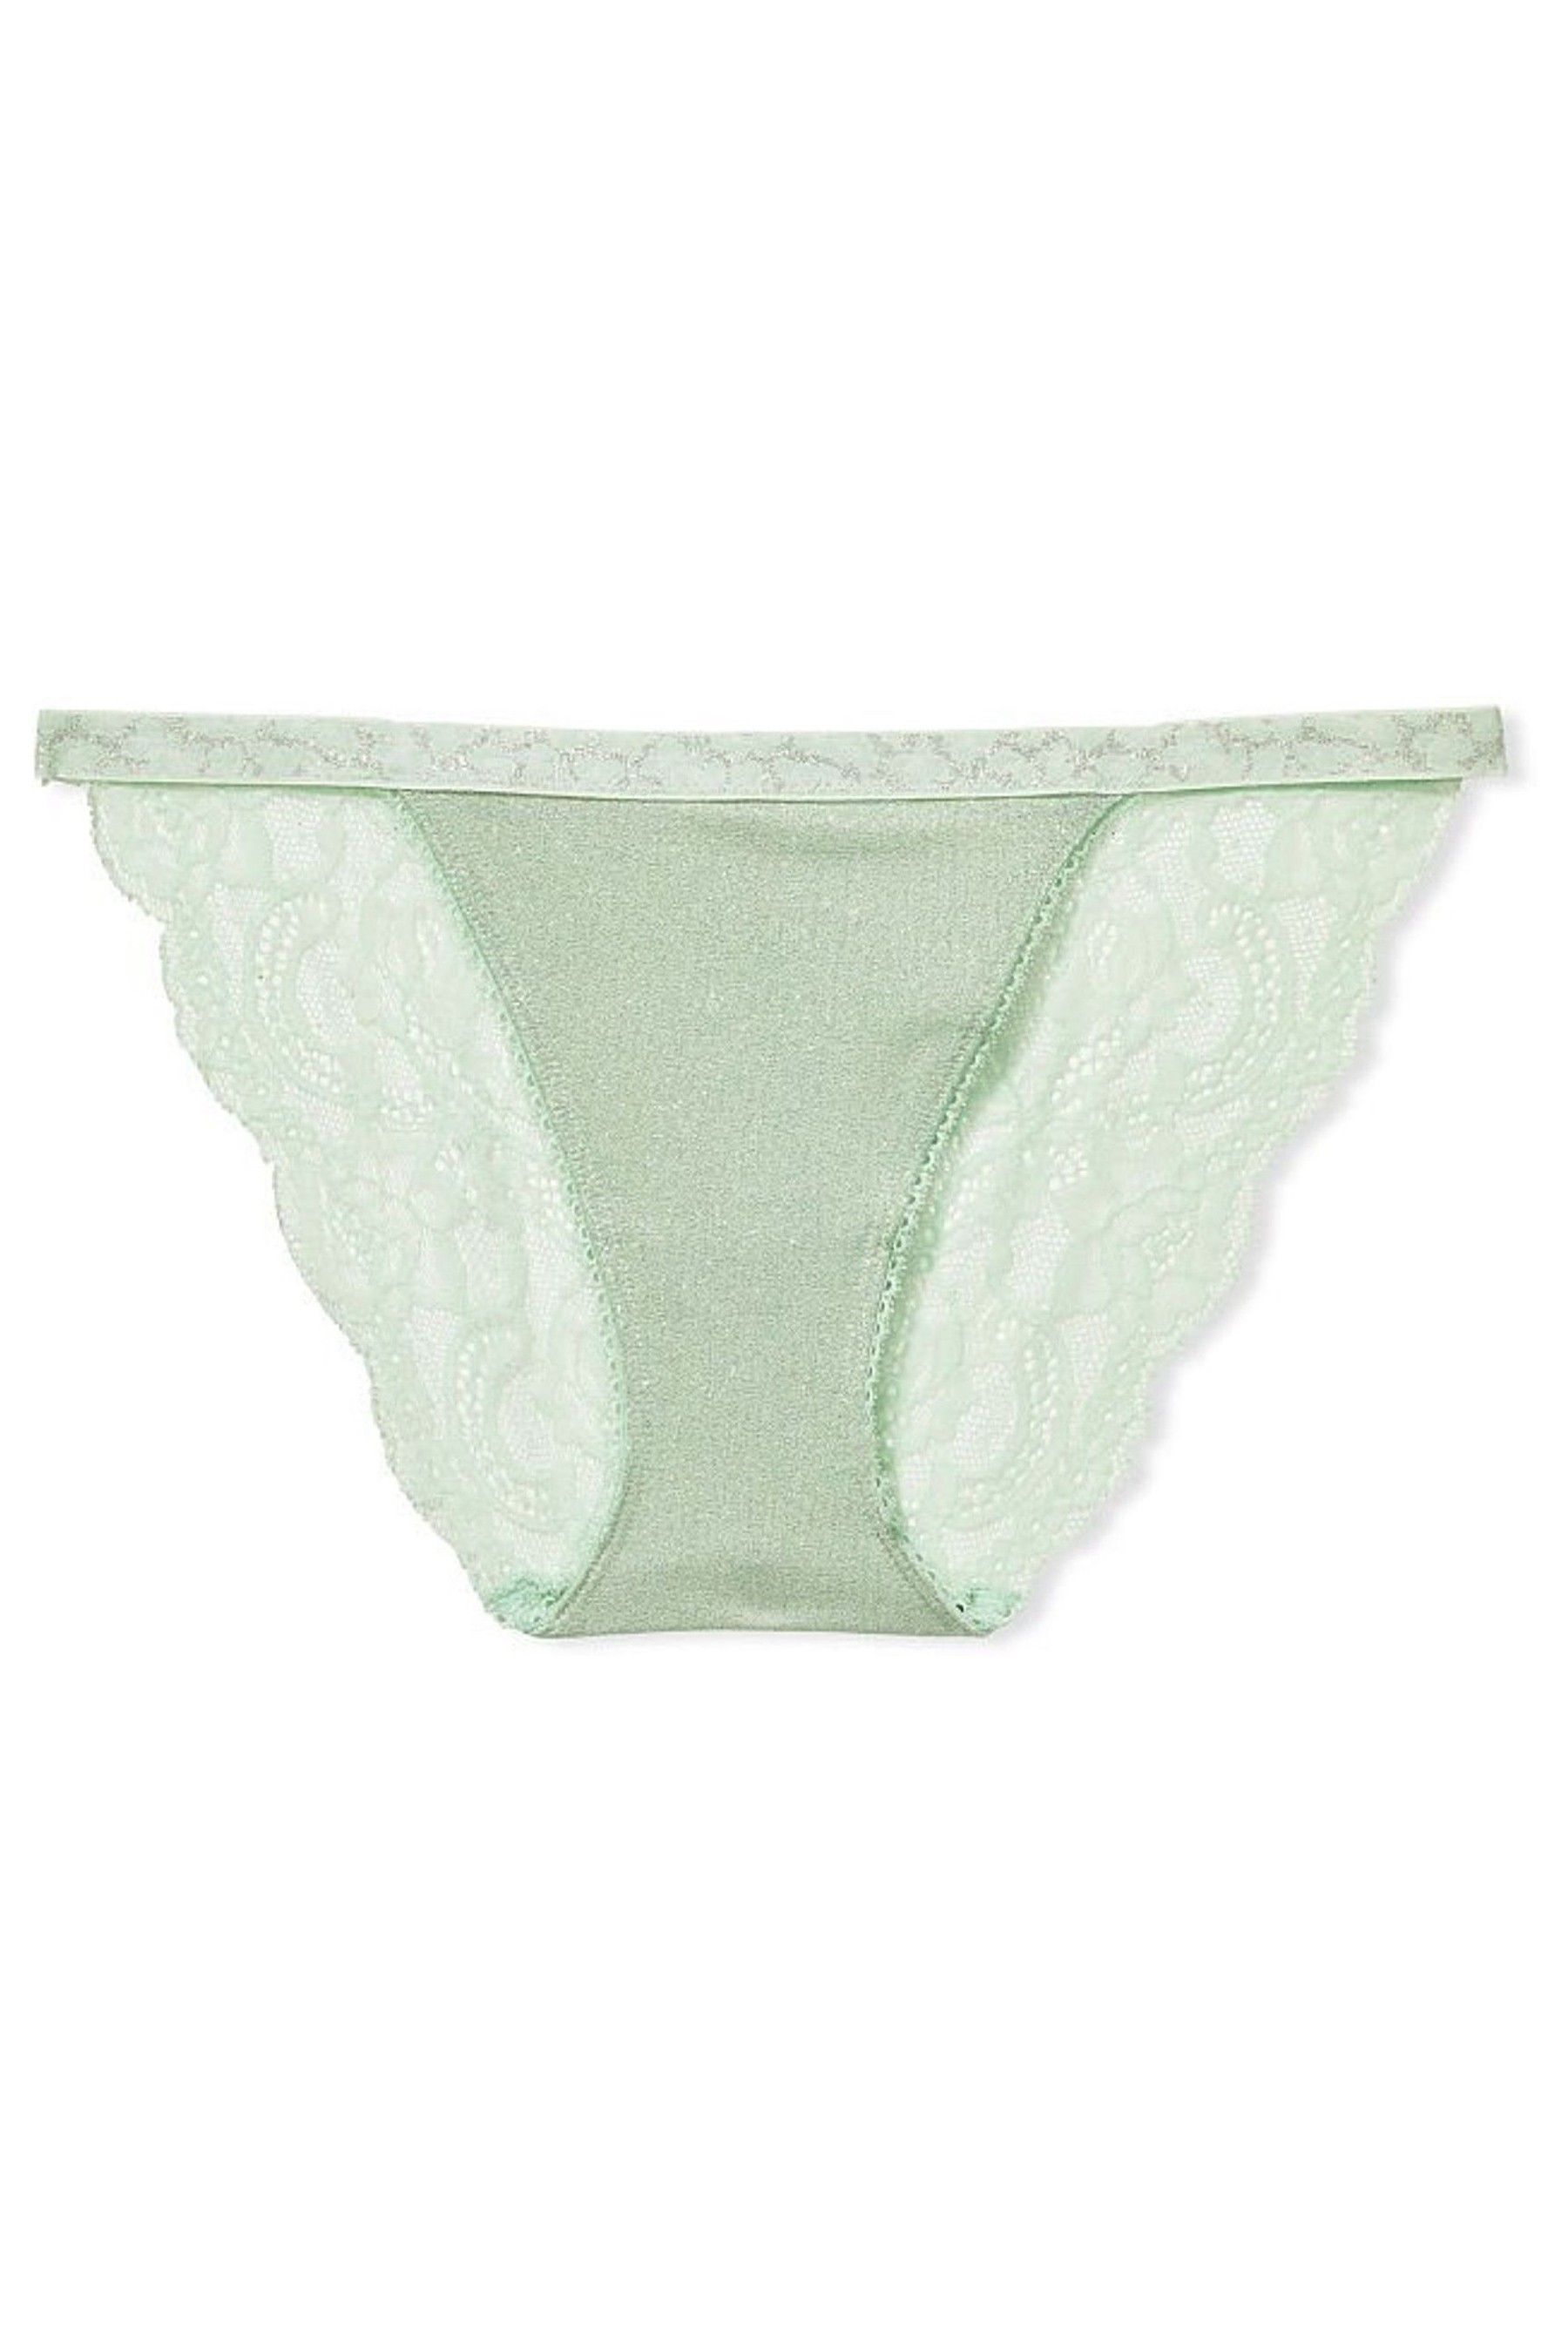 Buy Victoria's Secret Cotton Shine Lace Back Bikini Panty from the ...